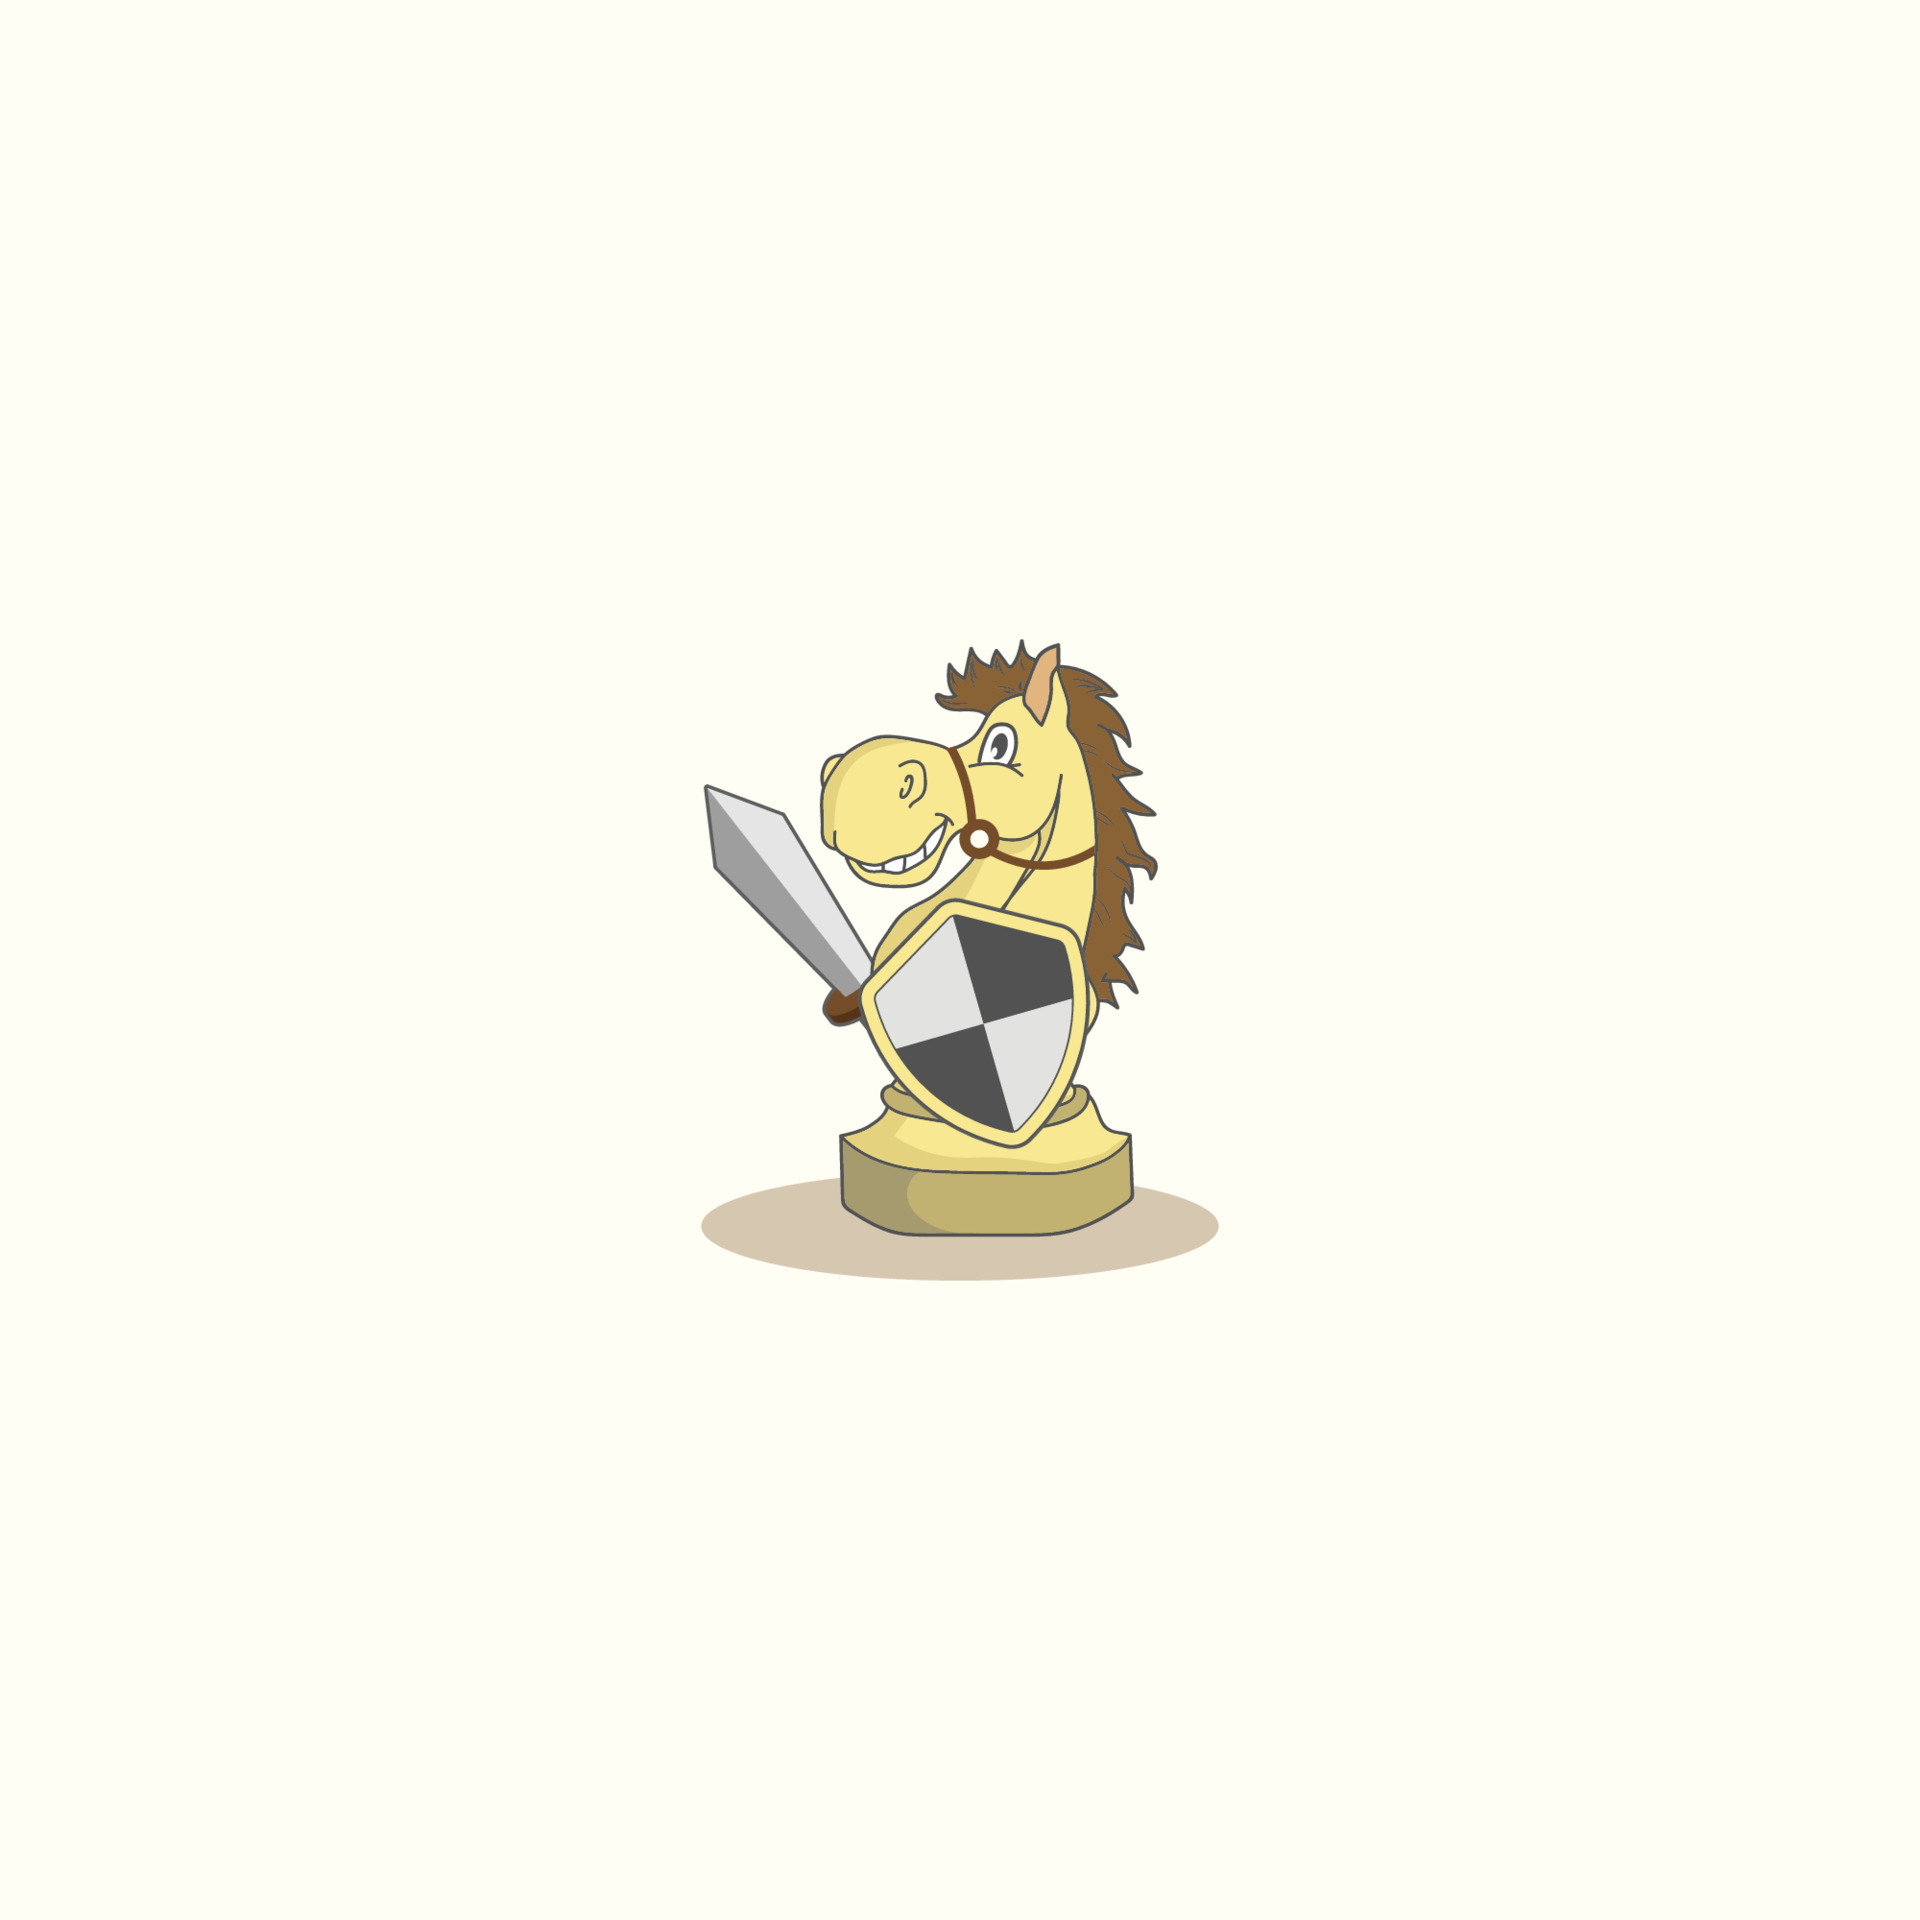 cavaleiro cavalo xadrez desenho animado mascote logotipo 20824018 Vetor no  Vecteezy